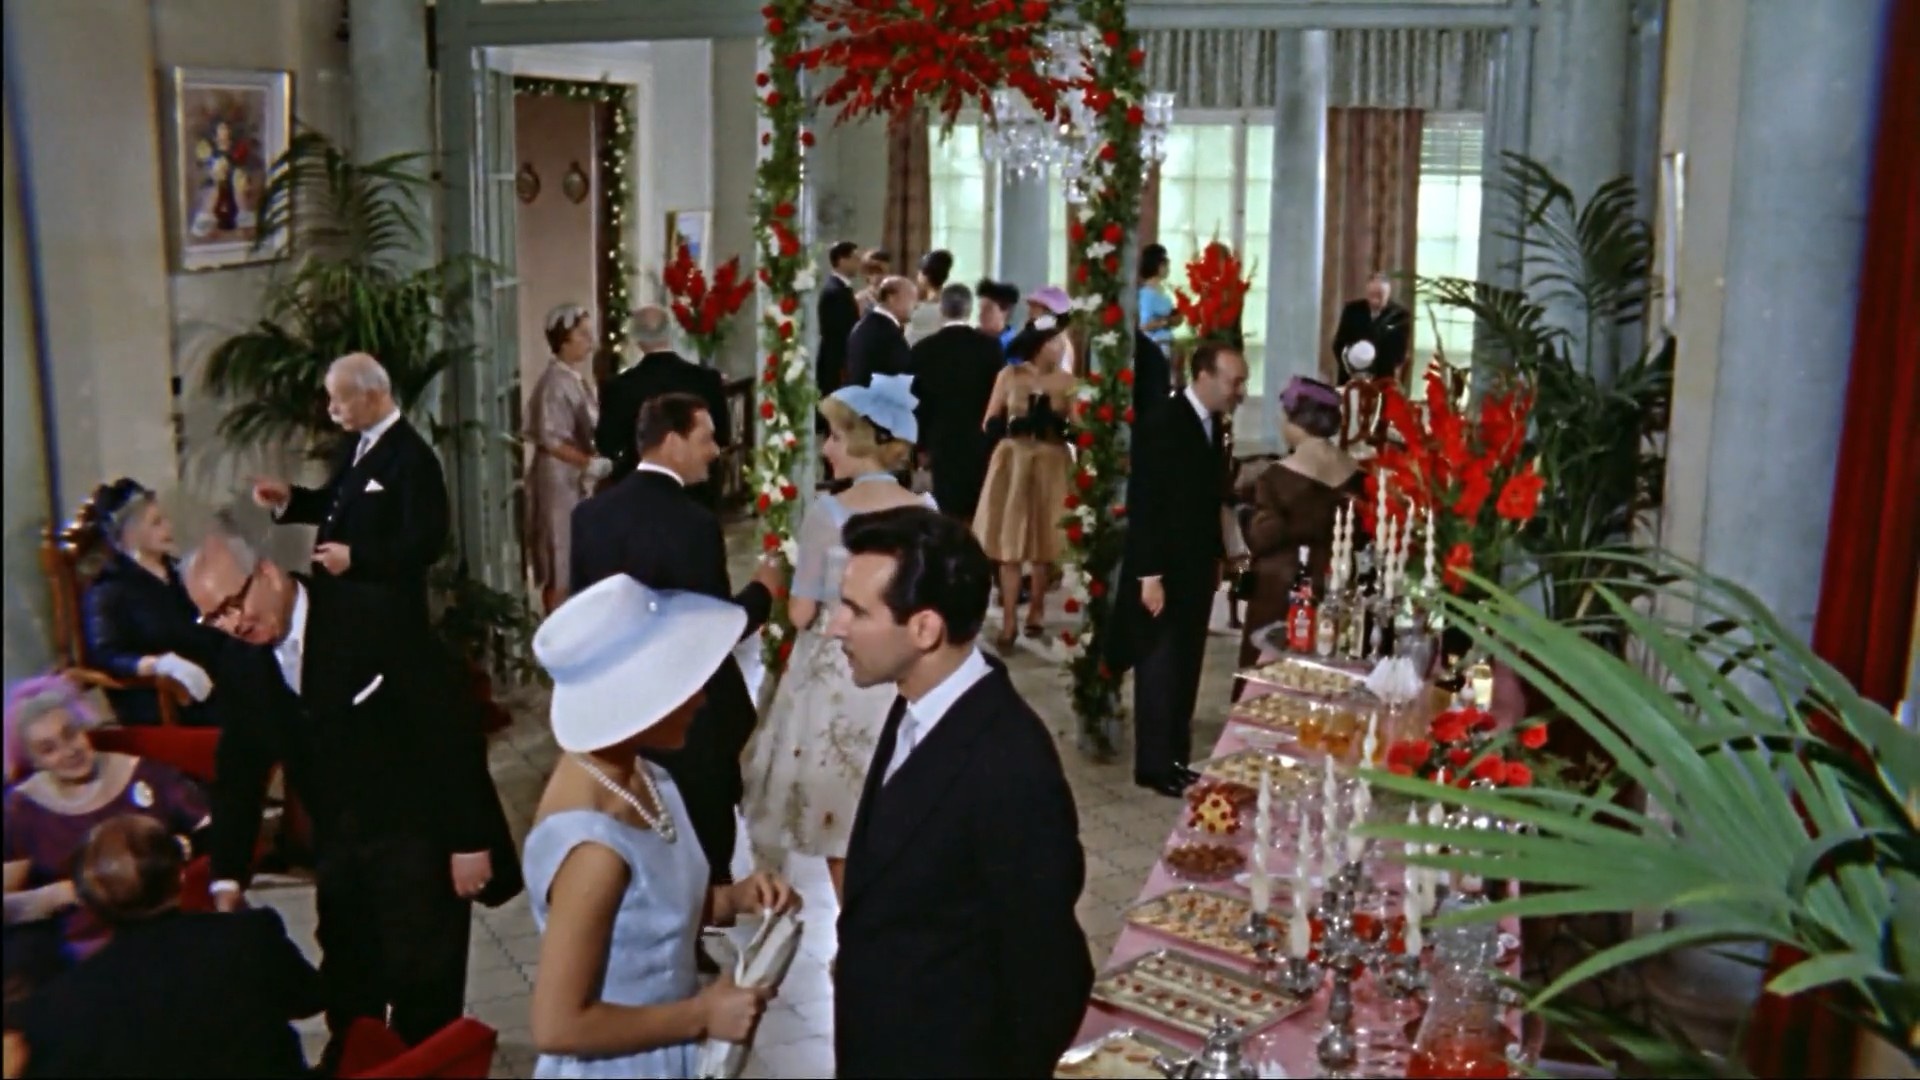 La boda era a las doce (1964)2.jpg